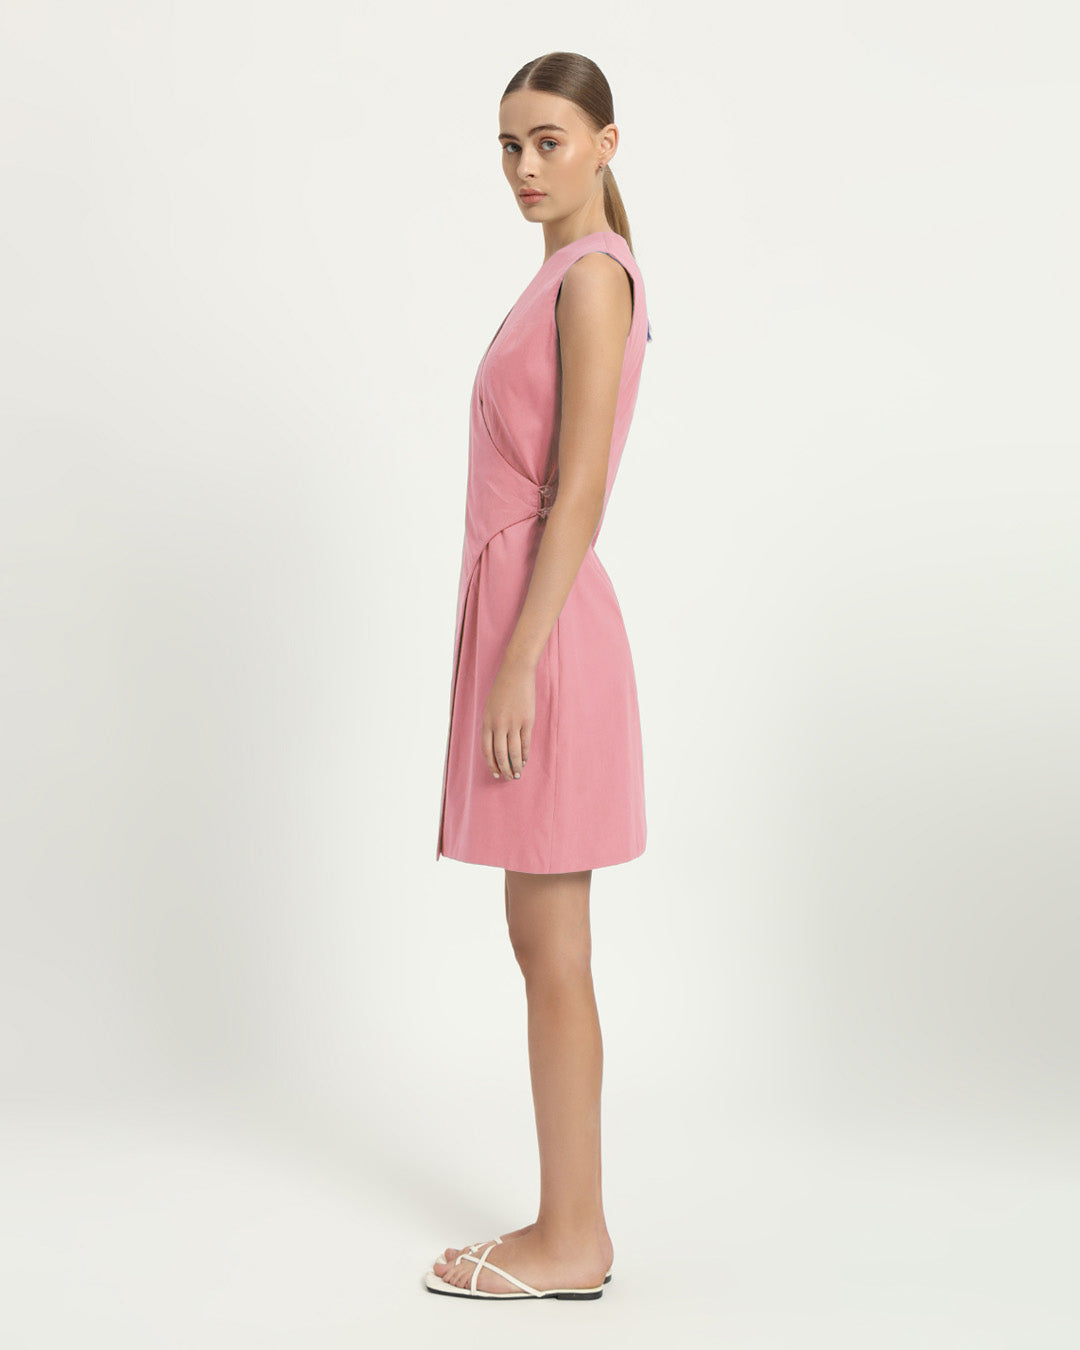 The Augsberg Fondant Pink Cotton Dress